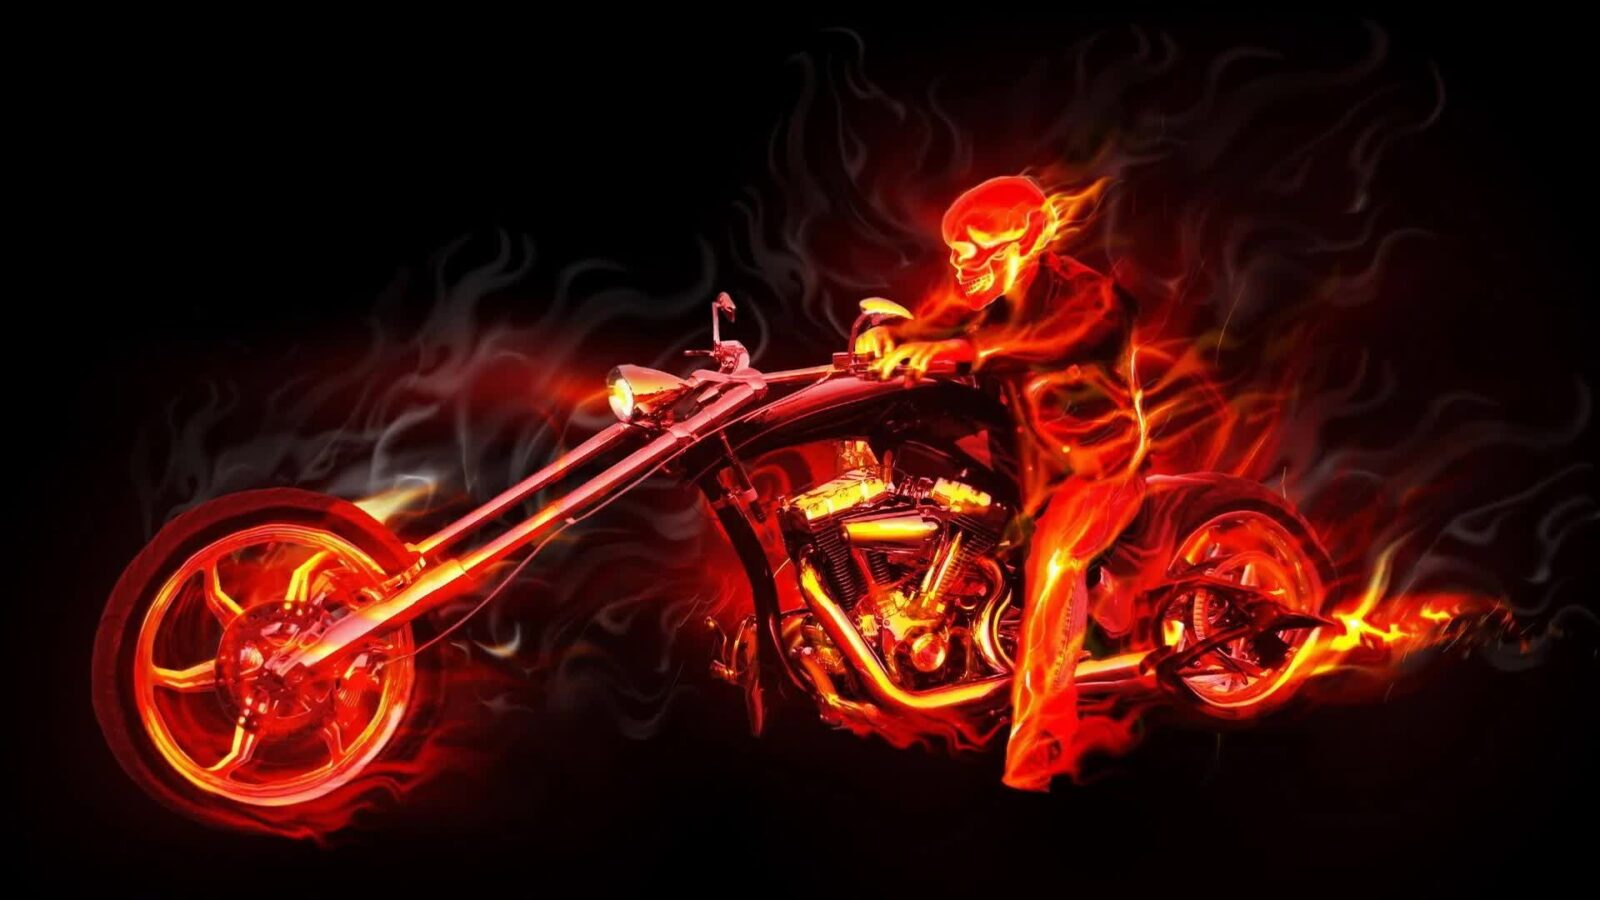 Dark Rider Or Ghost Rider Artwork - Free Live Wallpaper